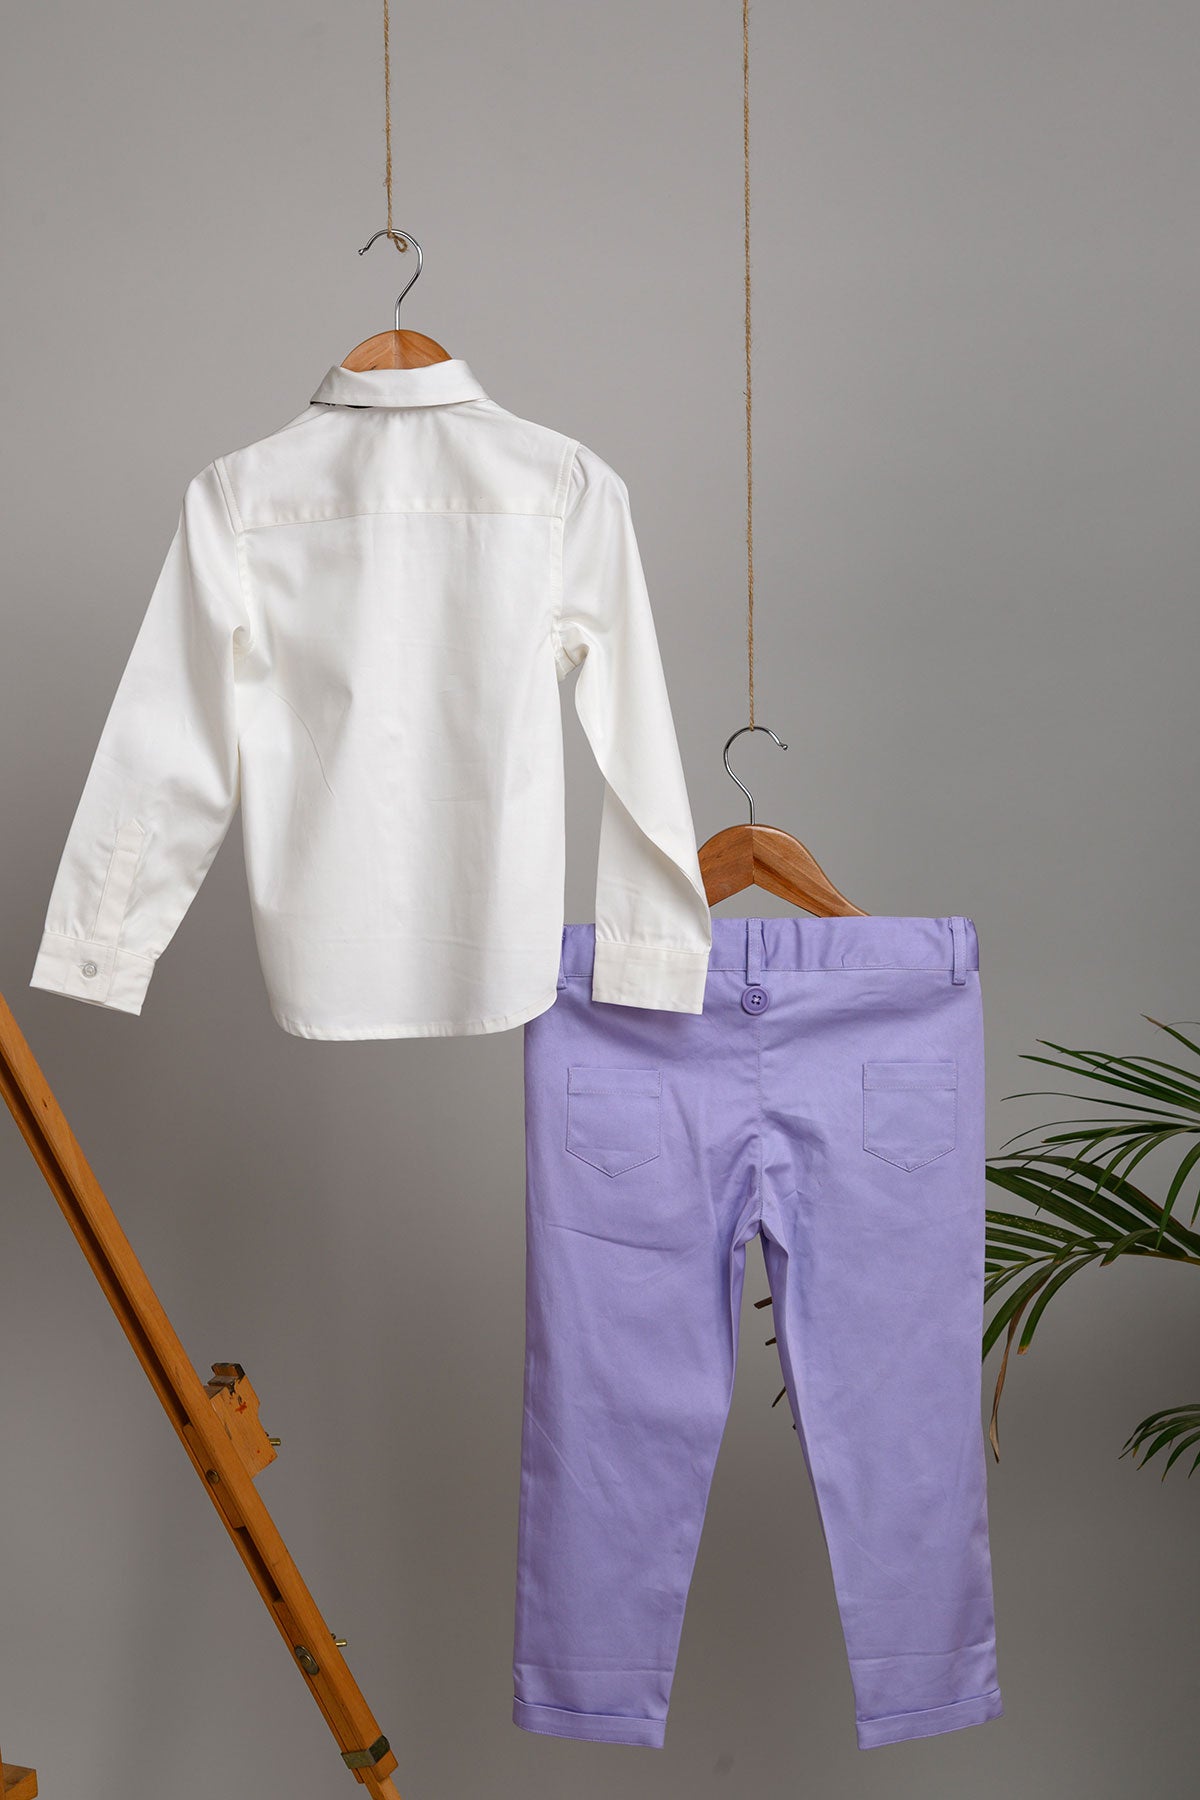 Raja Pants, Shirt, Bow and Suspenders Set - Lavender